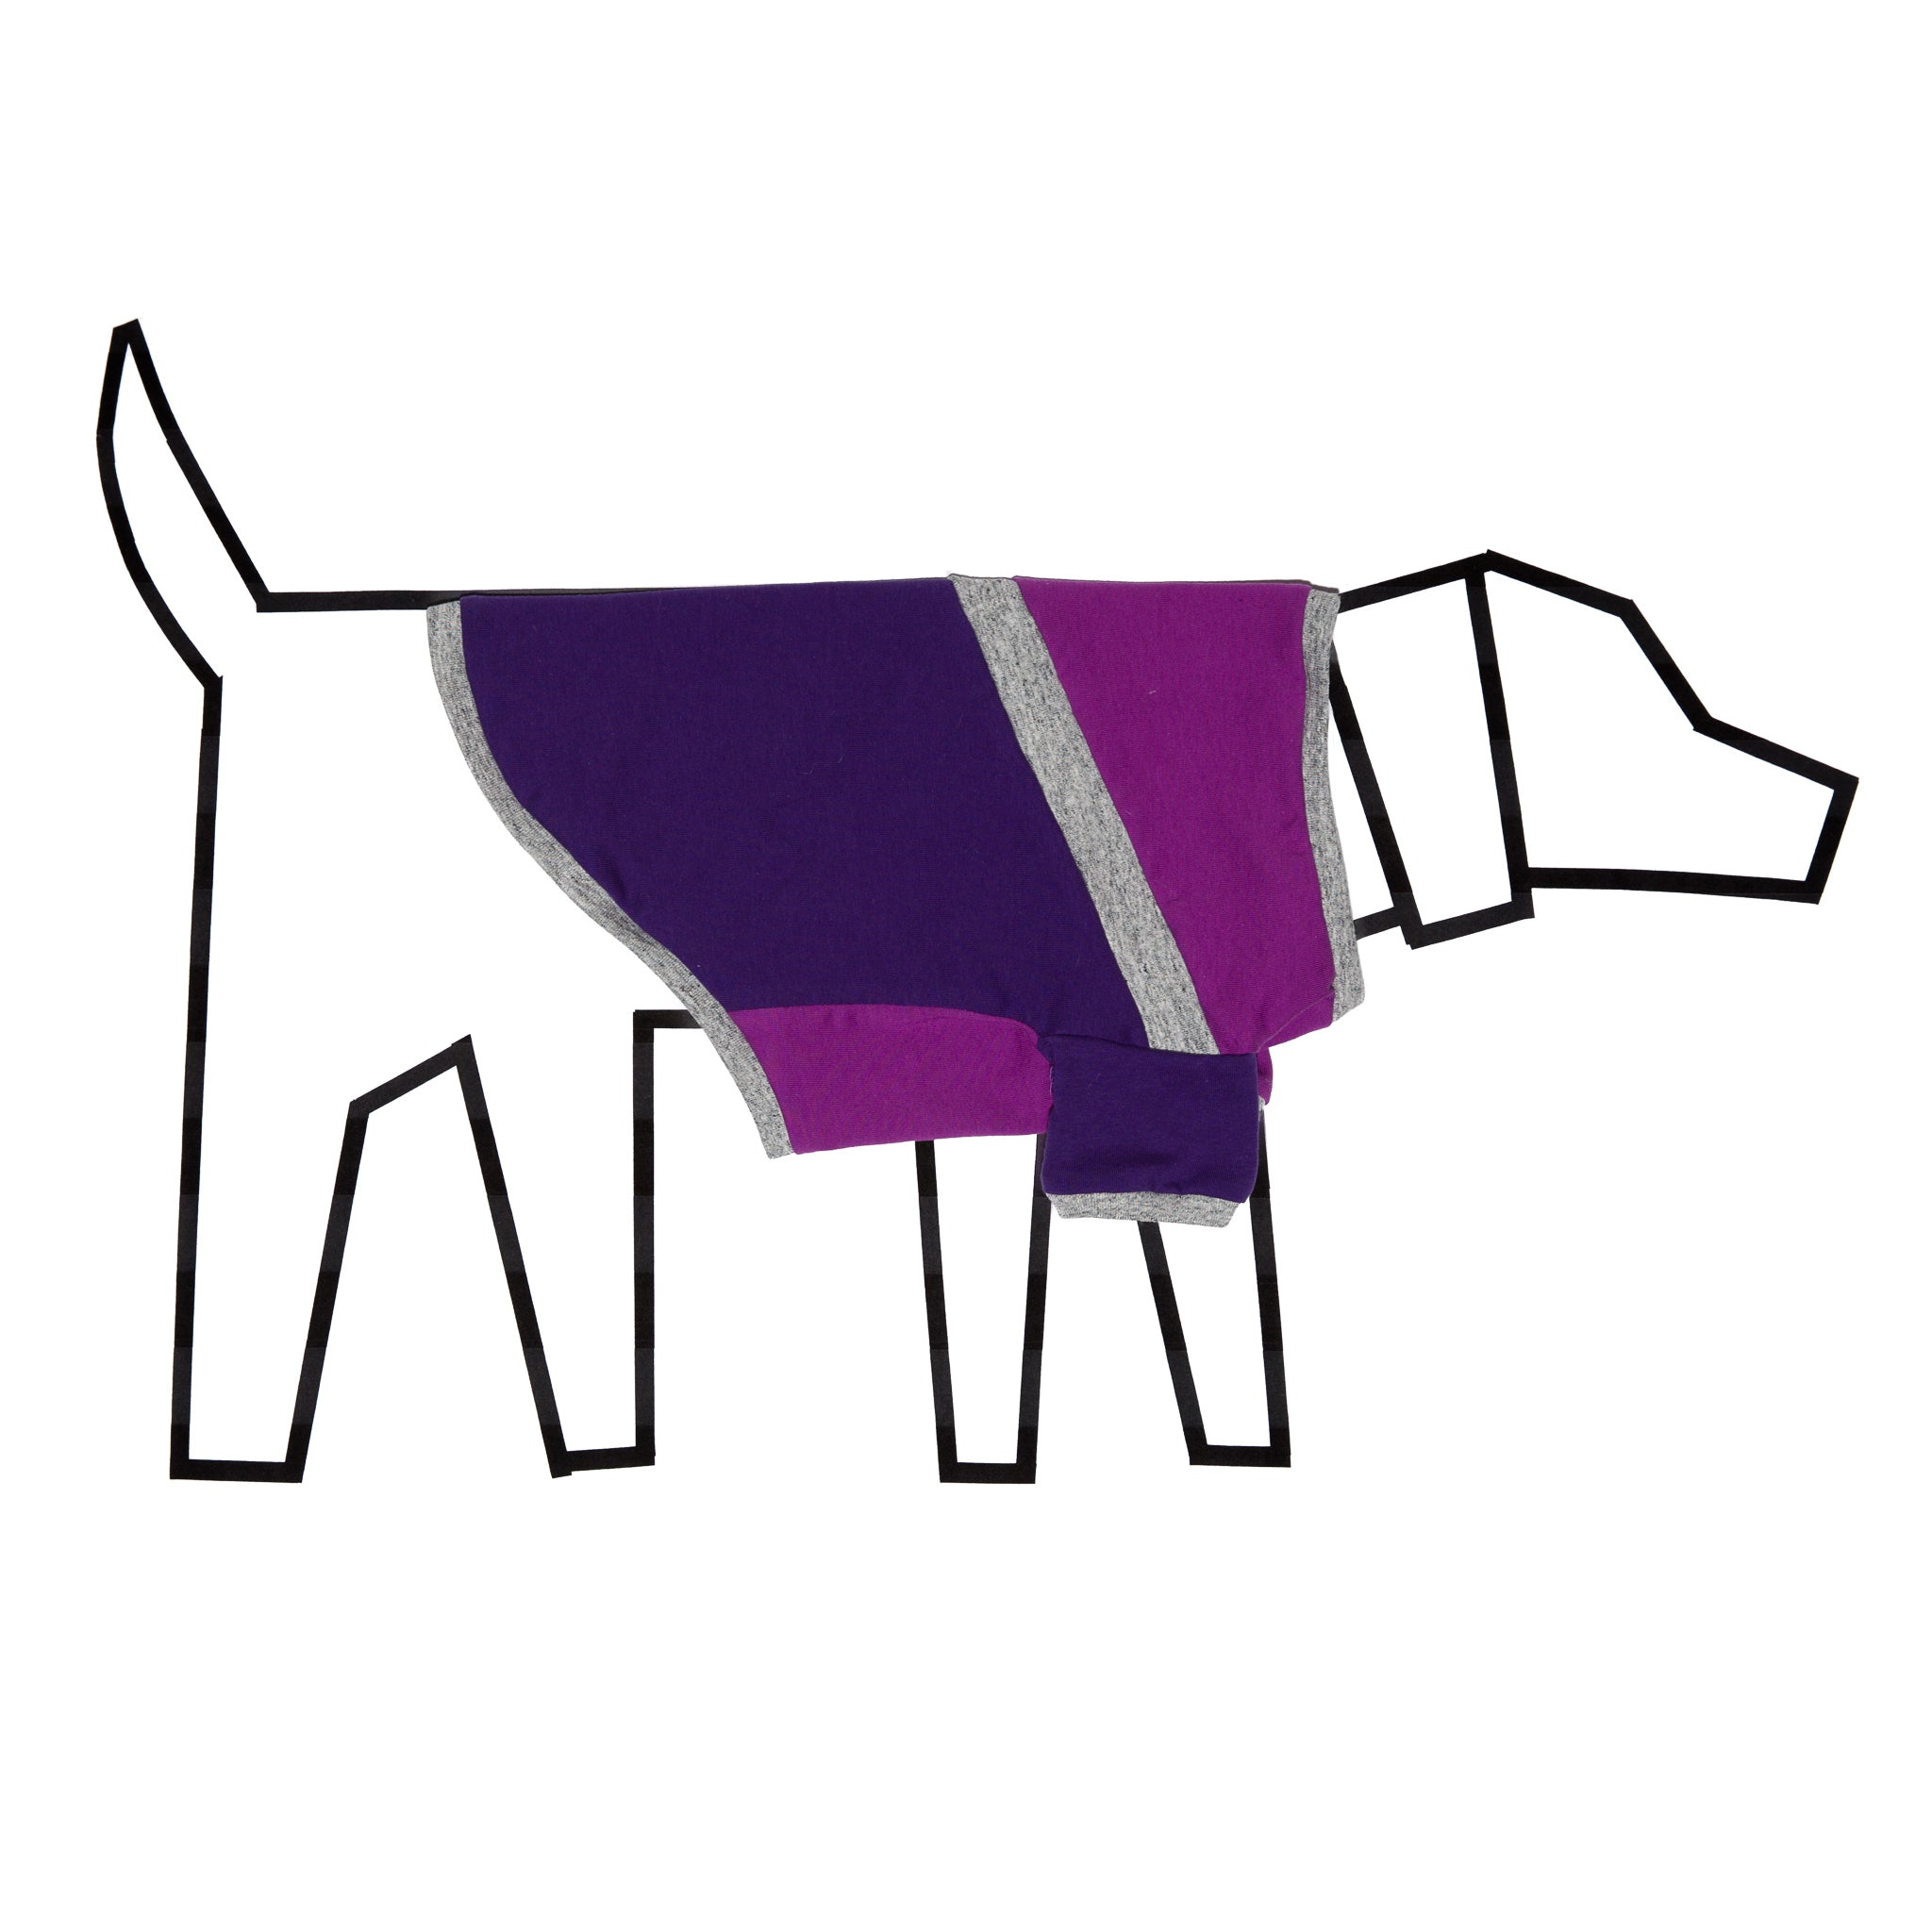 Ware of the Dog Diagonal Stripe Dog t shirt Purple Purple